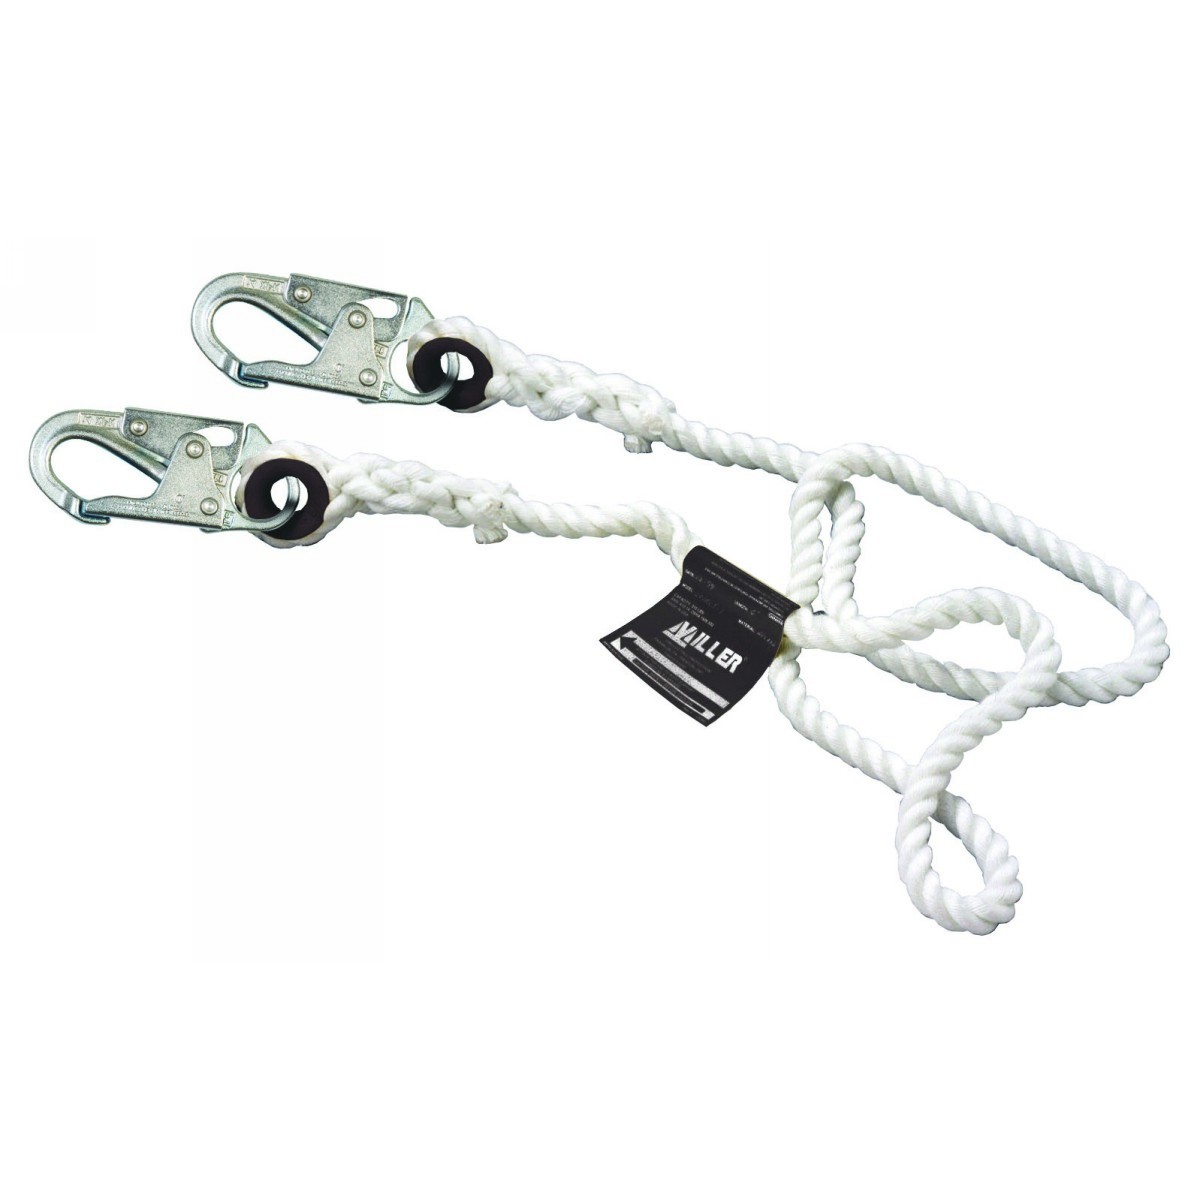 Honeywell Miller® 50' Spun Nylon Positioning Lanyard With Locking Snap Hook Harness Connector